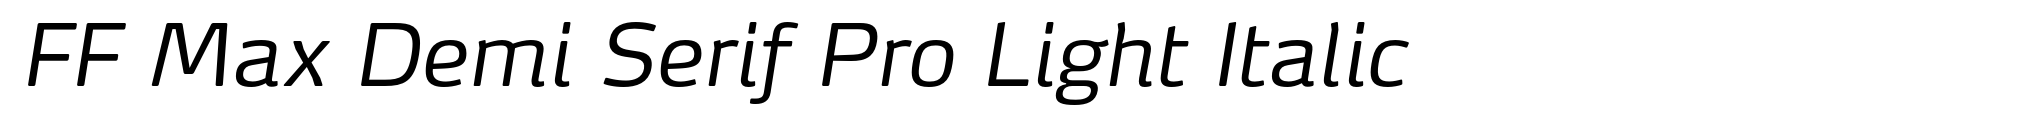 FF Max Demi Serif Pro Light Italic image